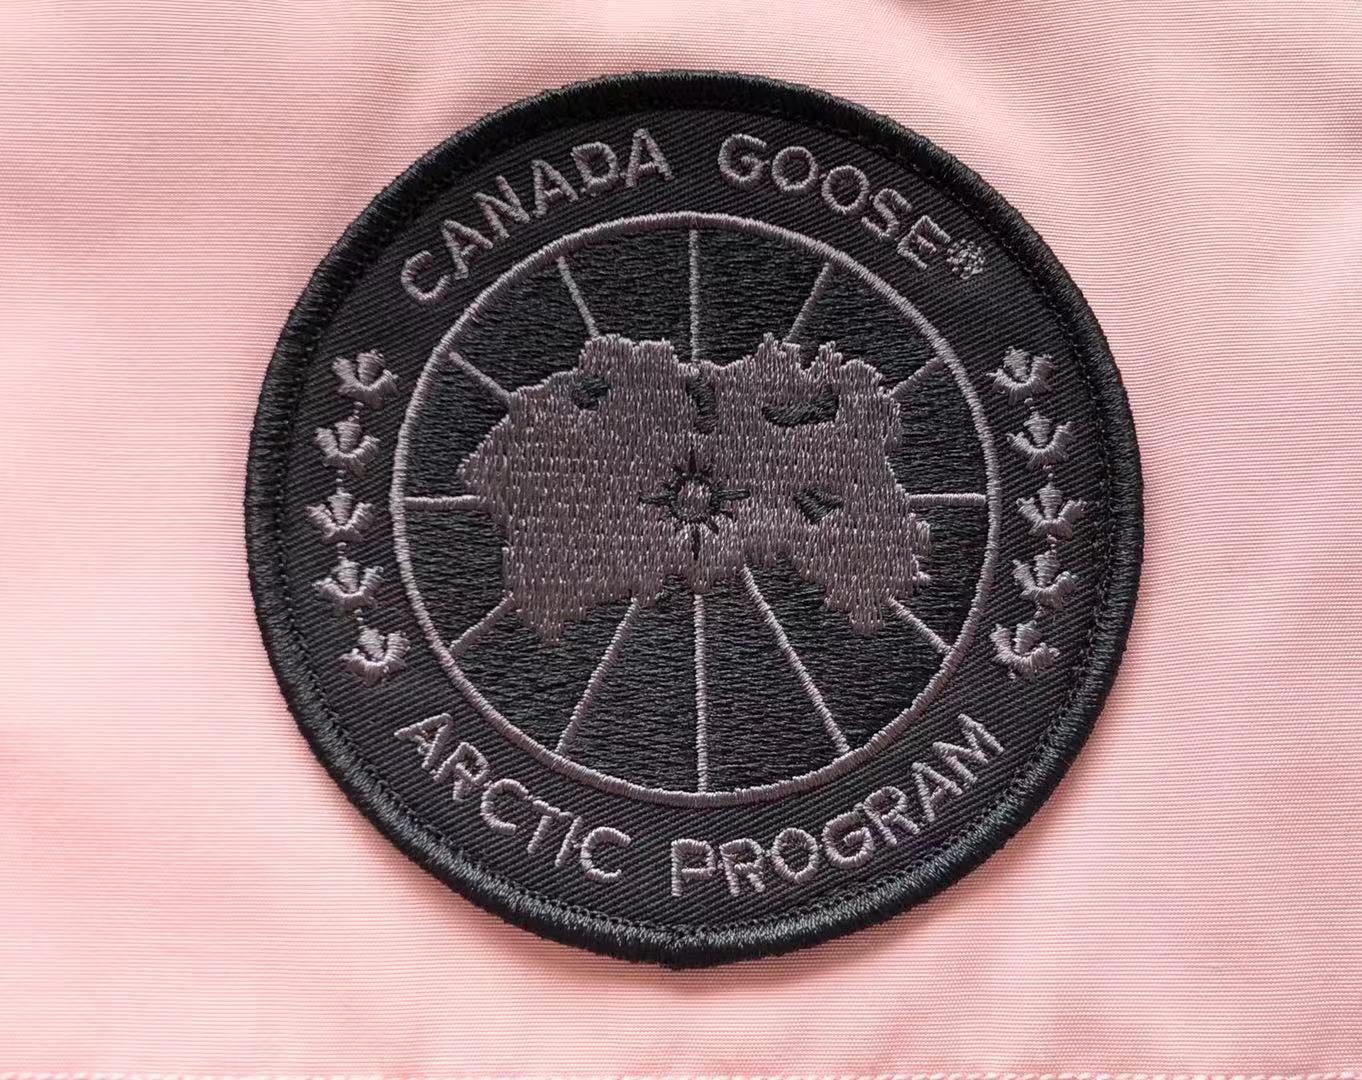 Pink Canada Goose